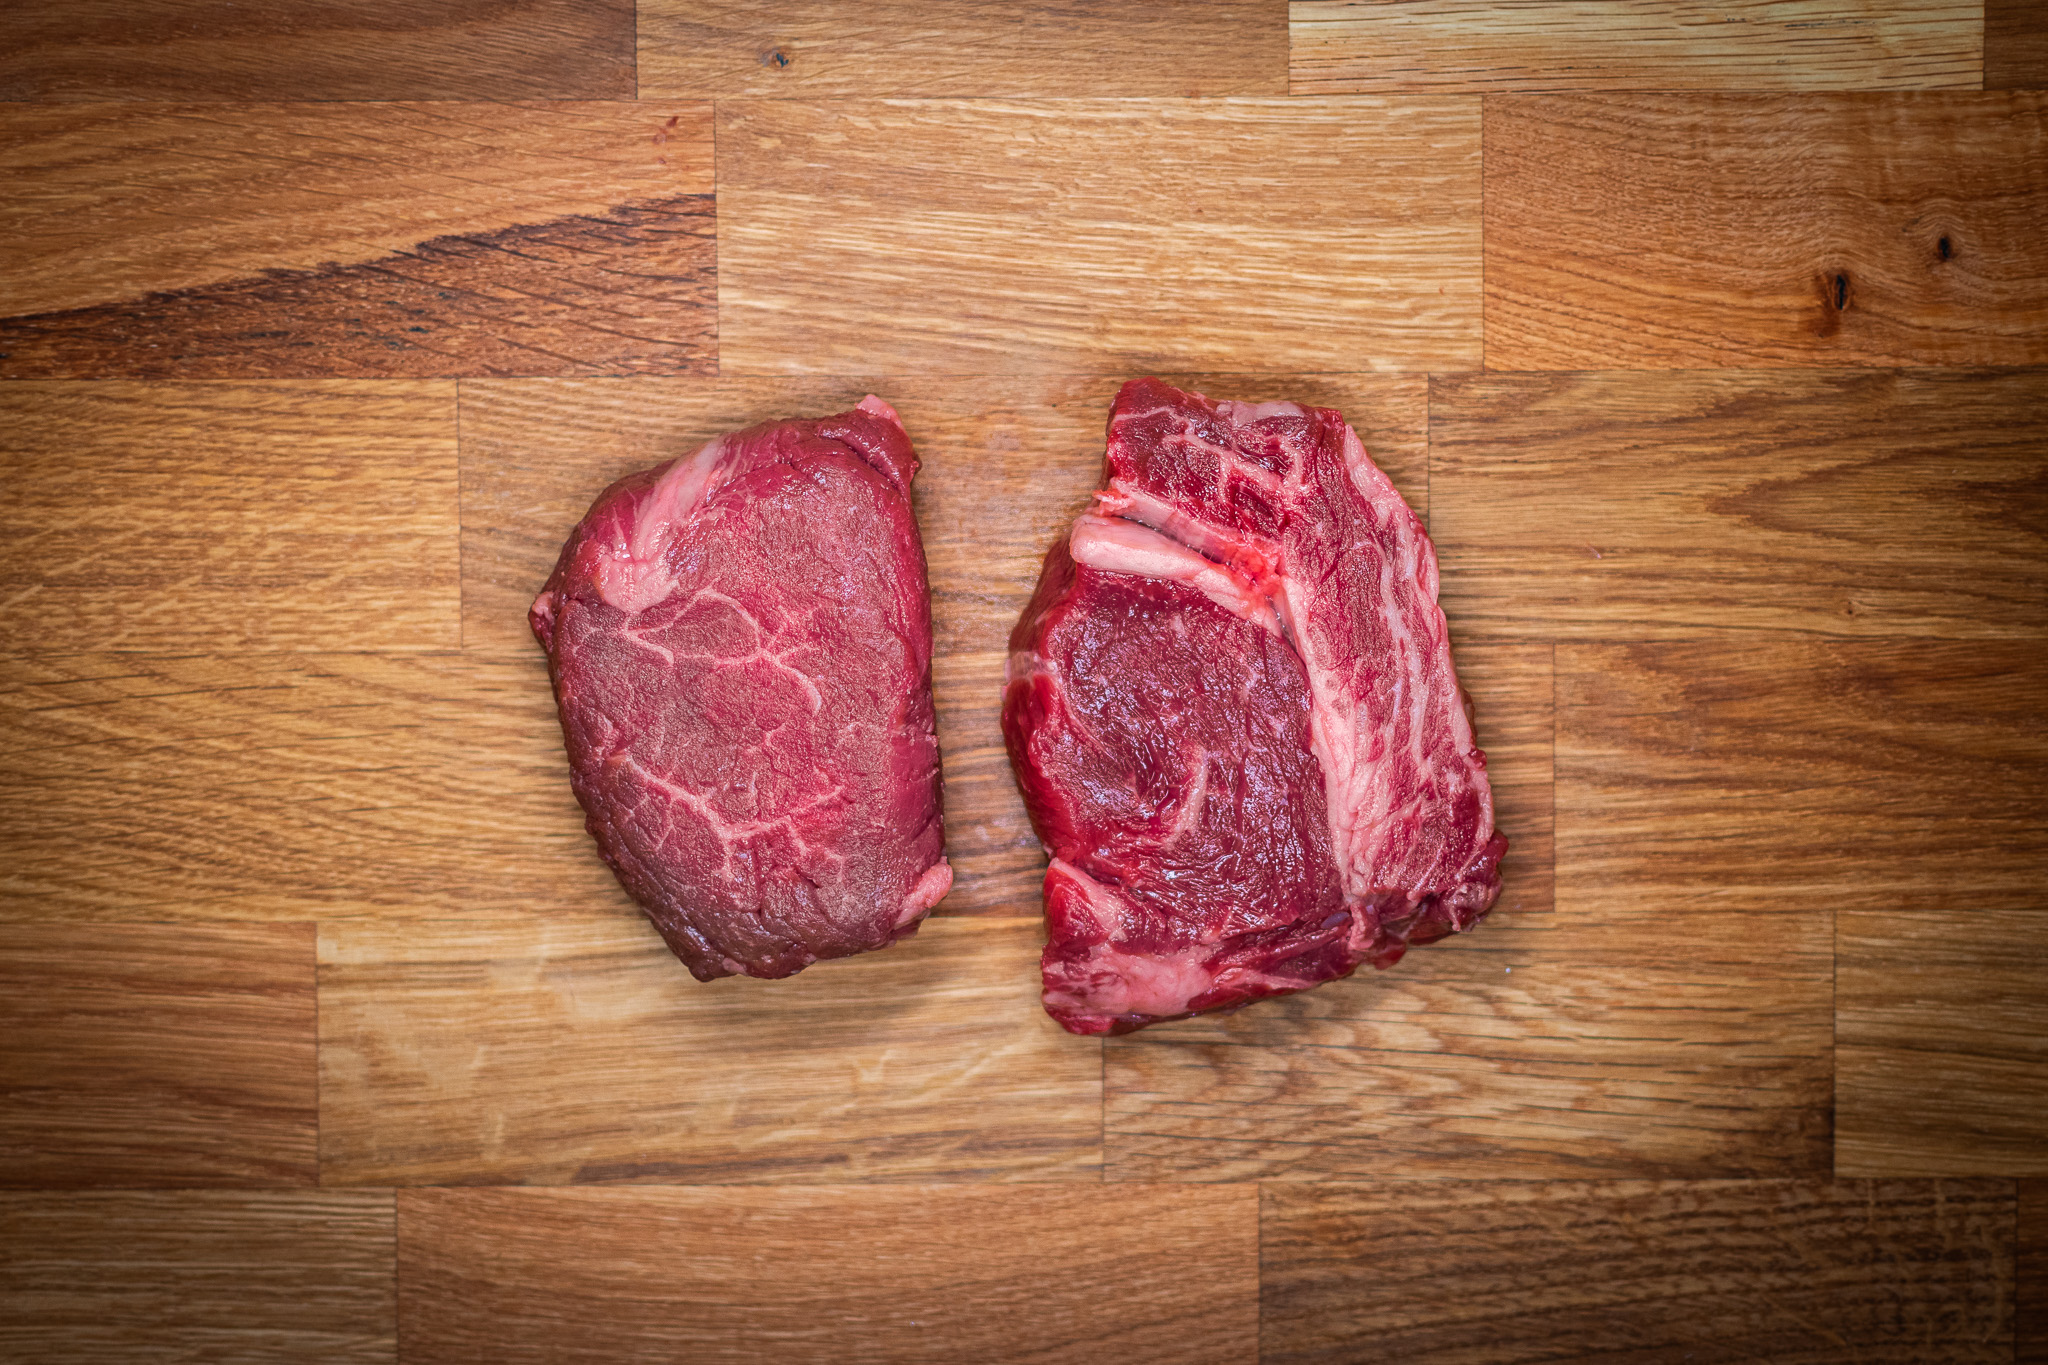 USDA Prime Beef Fillet steak, USDA Prime Beef Rib eye